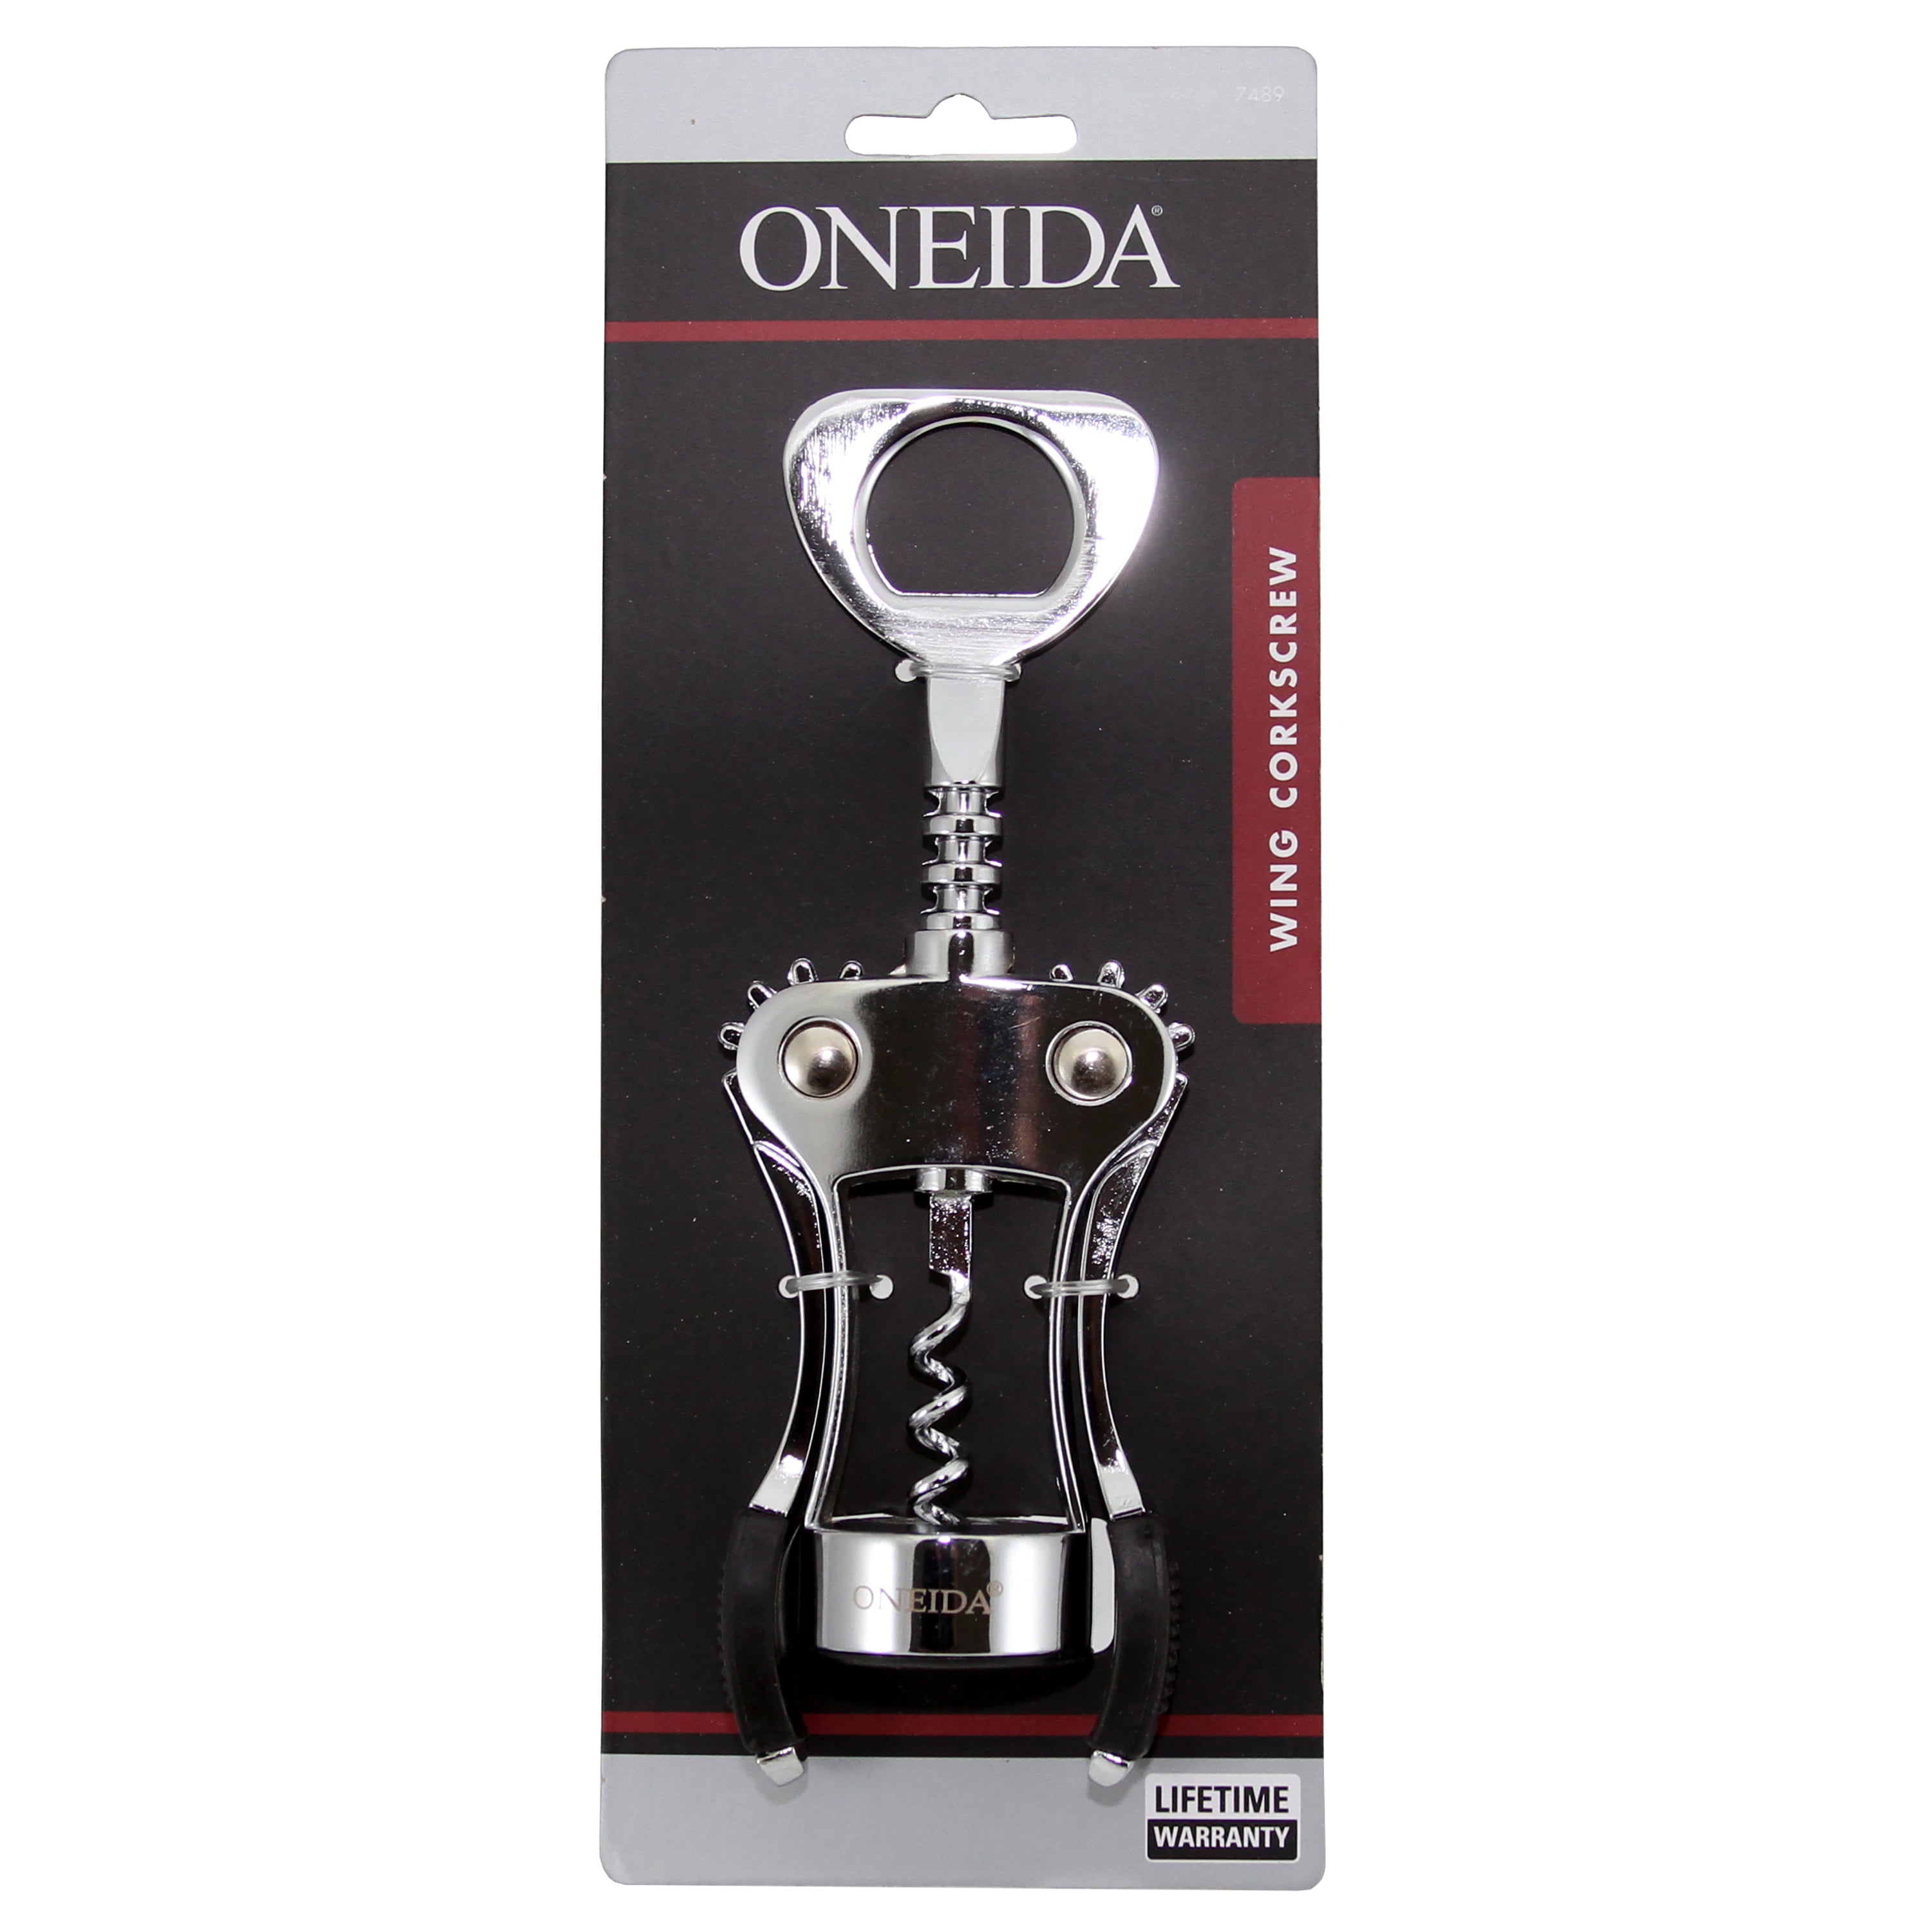 Oneida® Soft Touch Can Opener - Walmart.com - Walmart.com